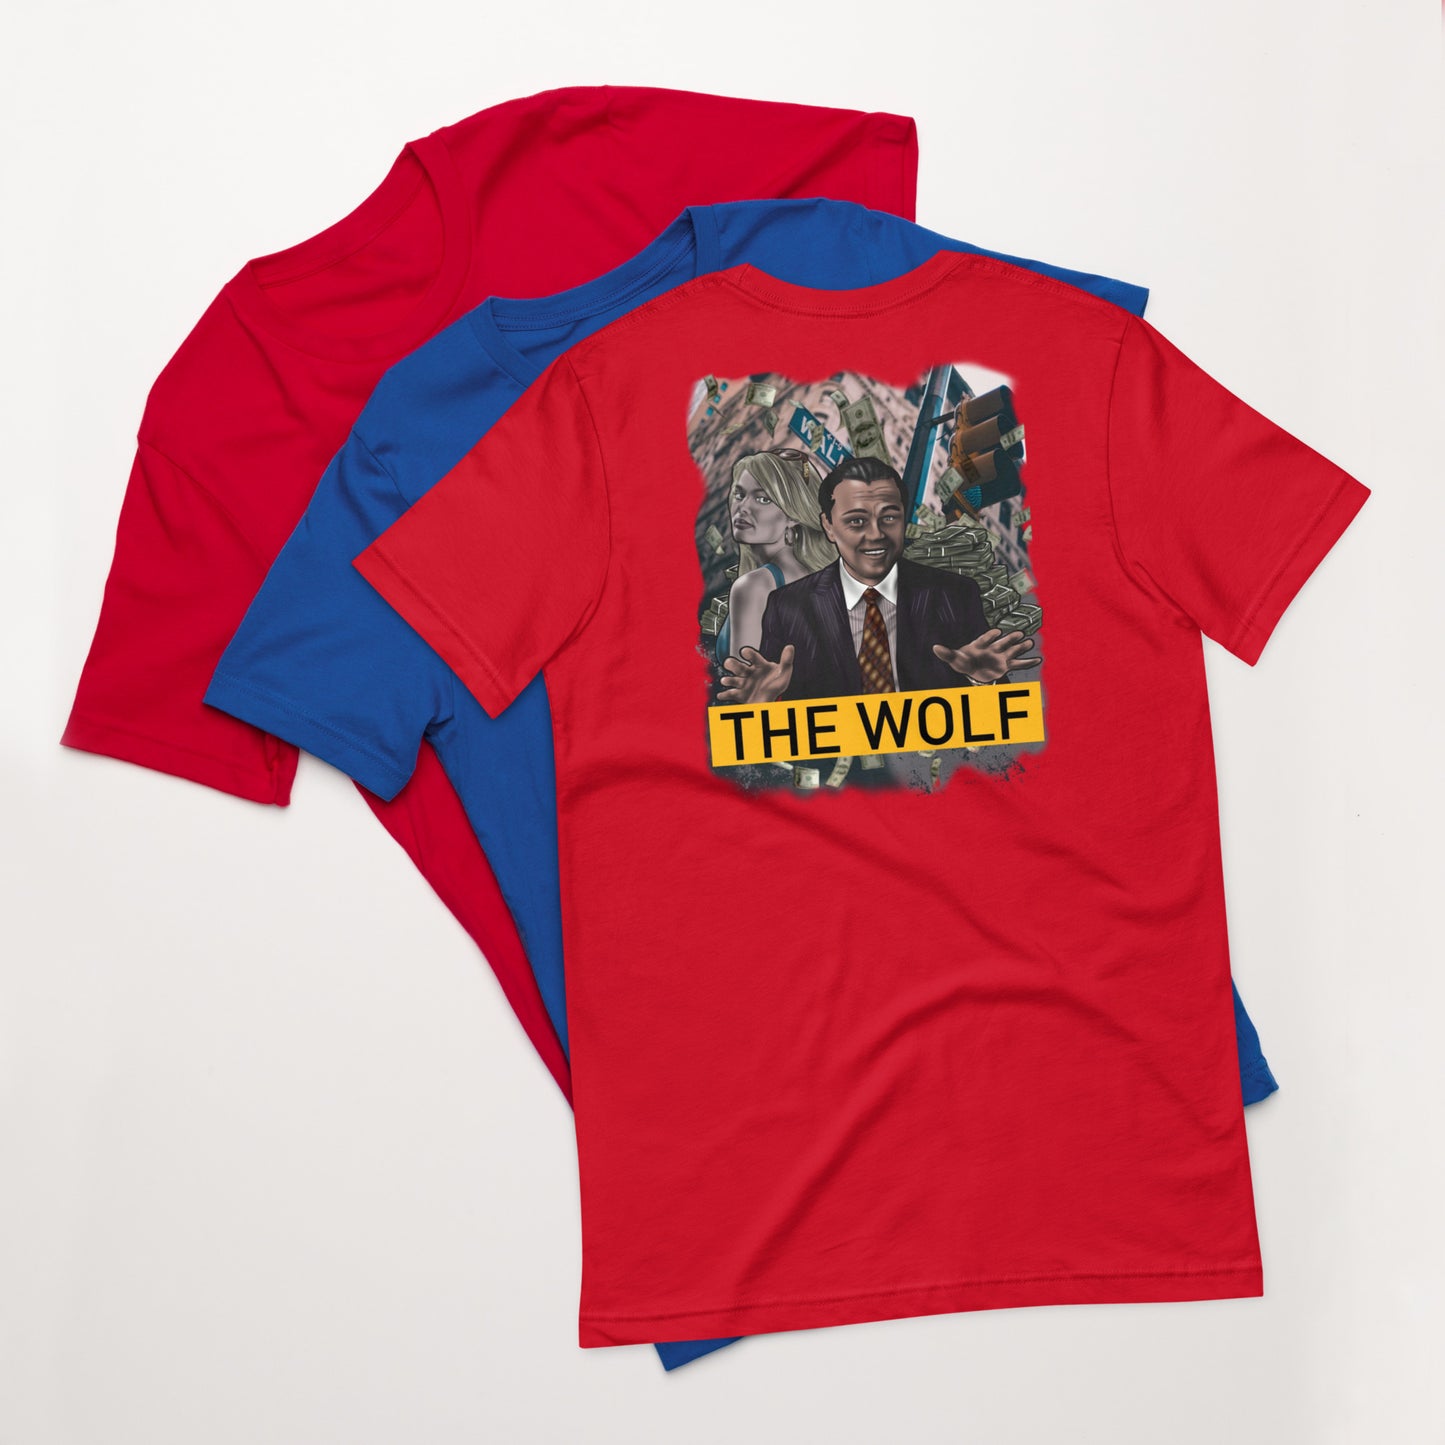 Unisex t-shirt (The Wolf)